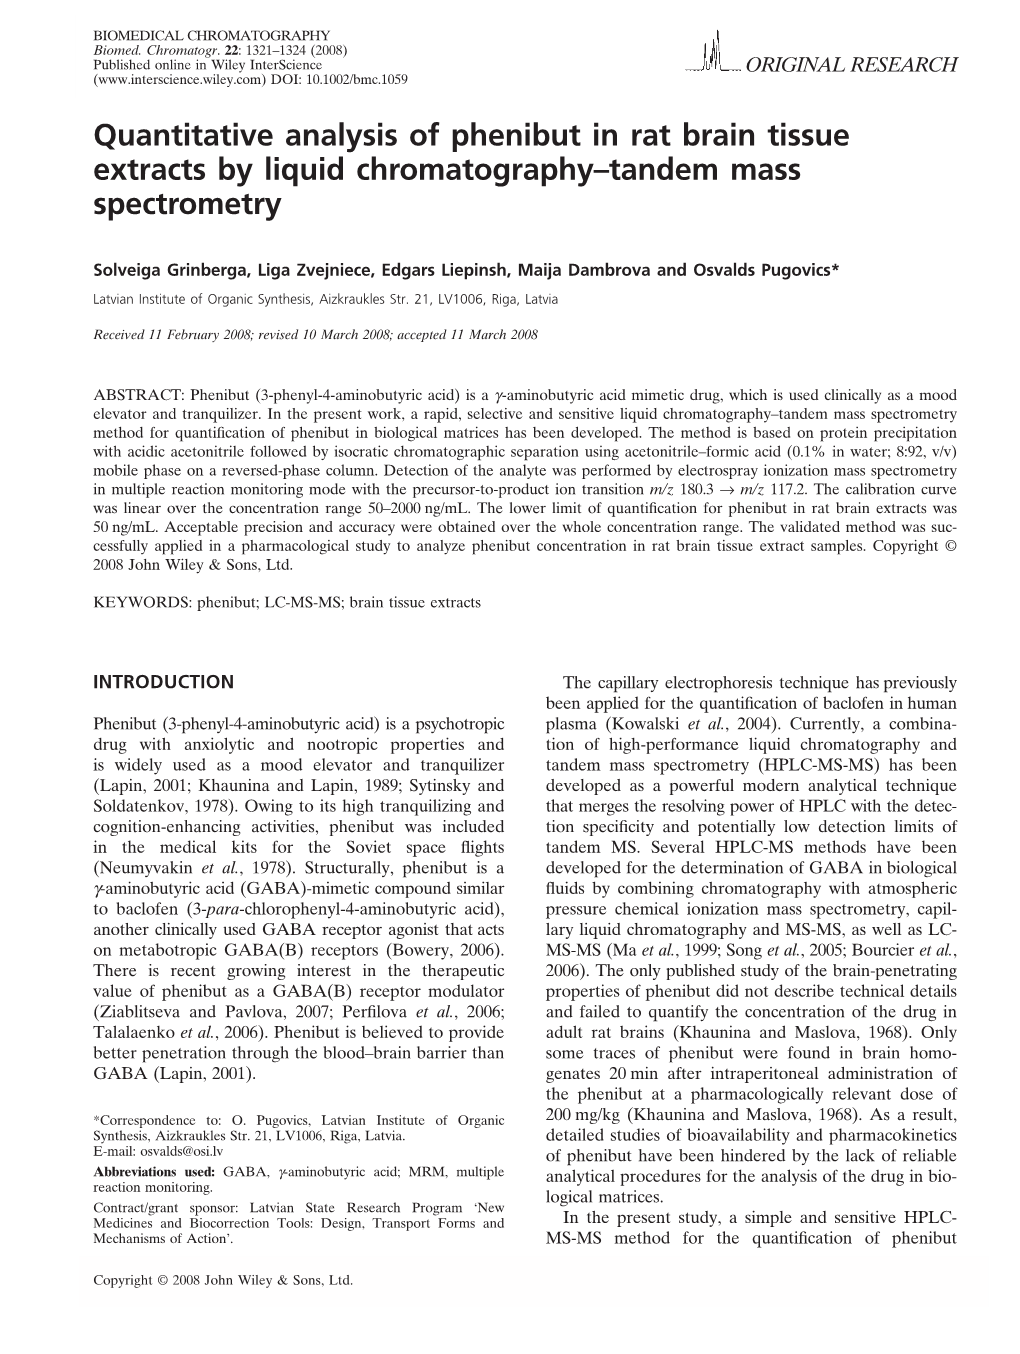 Quantitative Analysis of Phenibut in Rat Brain Tissue Extracts by Liquid Chromatography–Tandem Mass Spectrometry